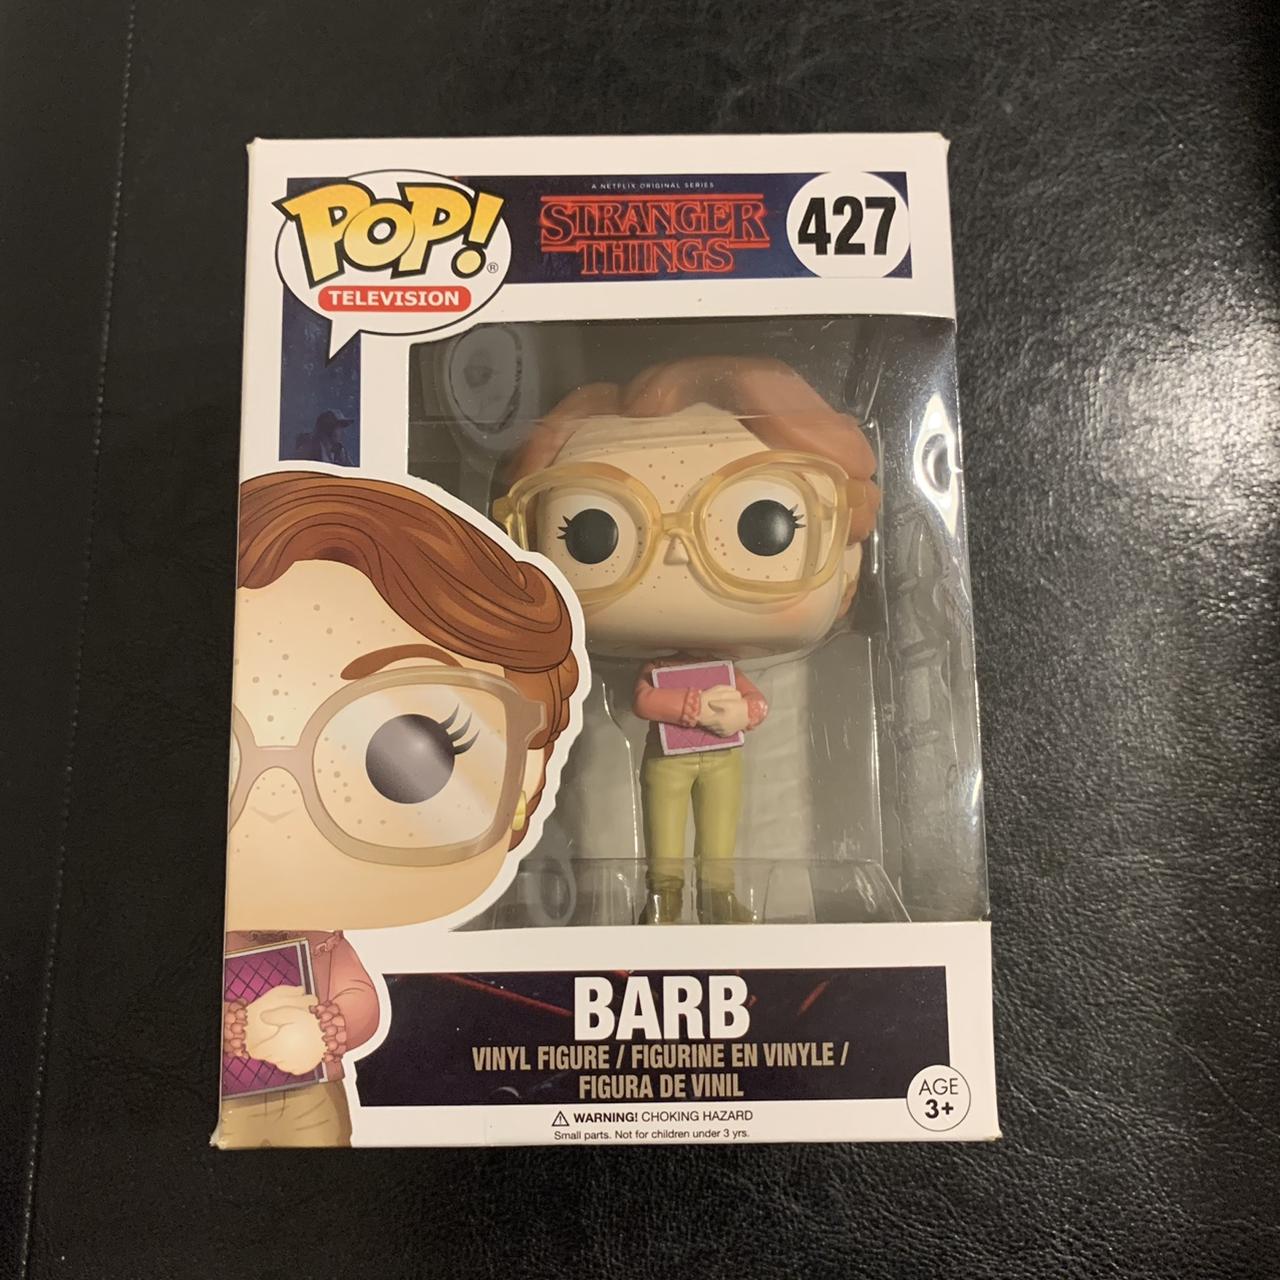 Barb From Stranger Things Has Risen From The DeadIn Riverdale - PopBuzz